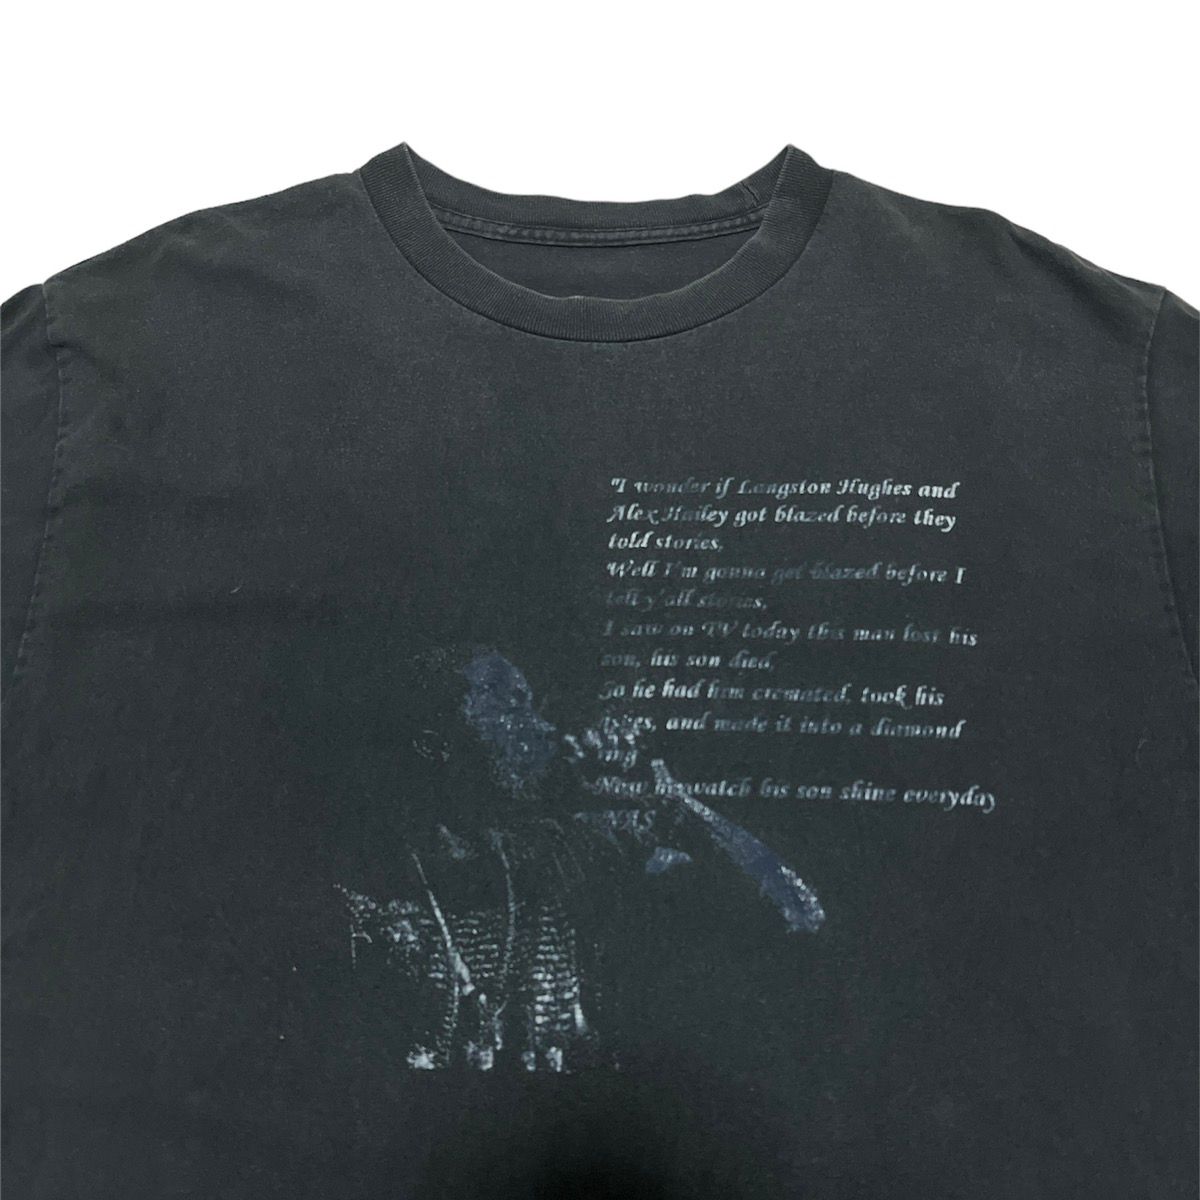 Vintage - Nas Blunt Ashes song lyric T shirt 2006 - 2